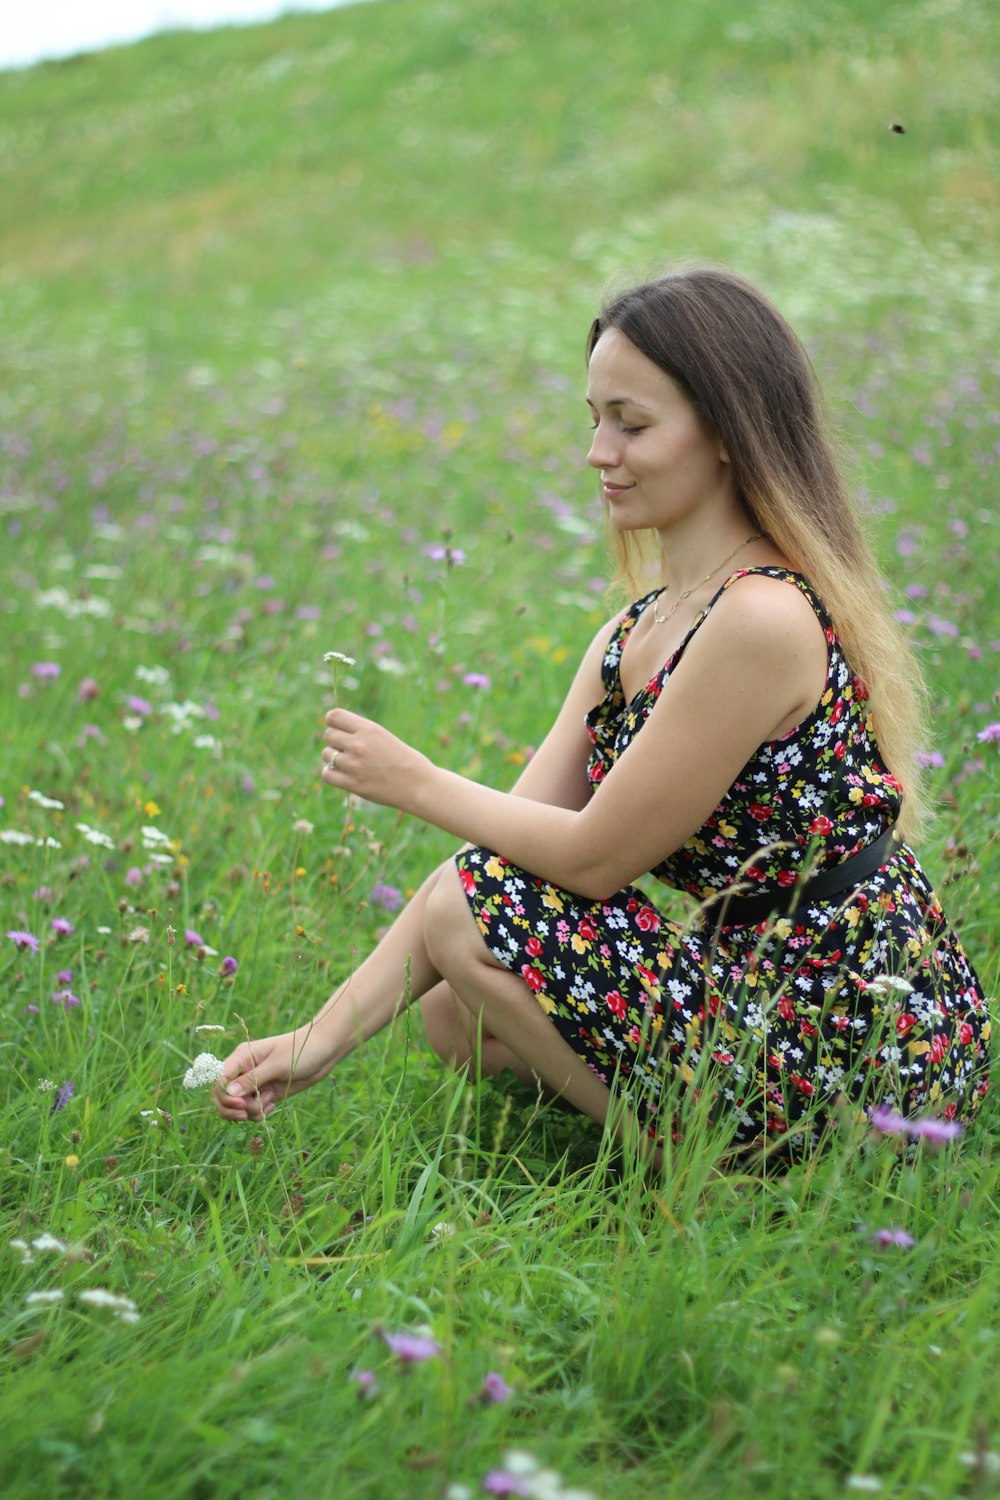 woman crouching on grass field